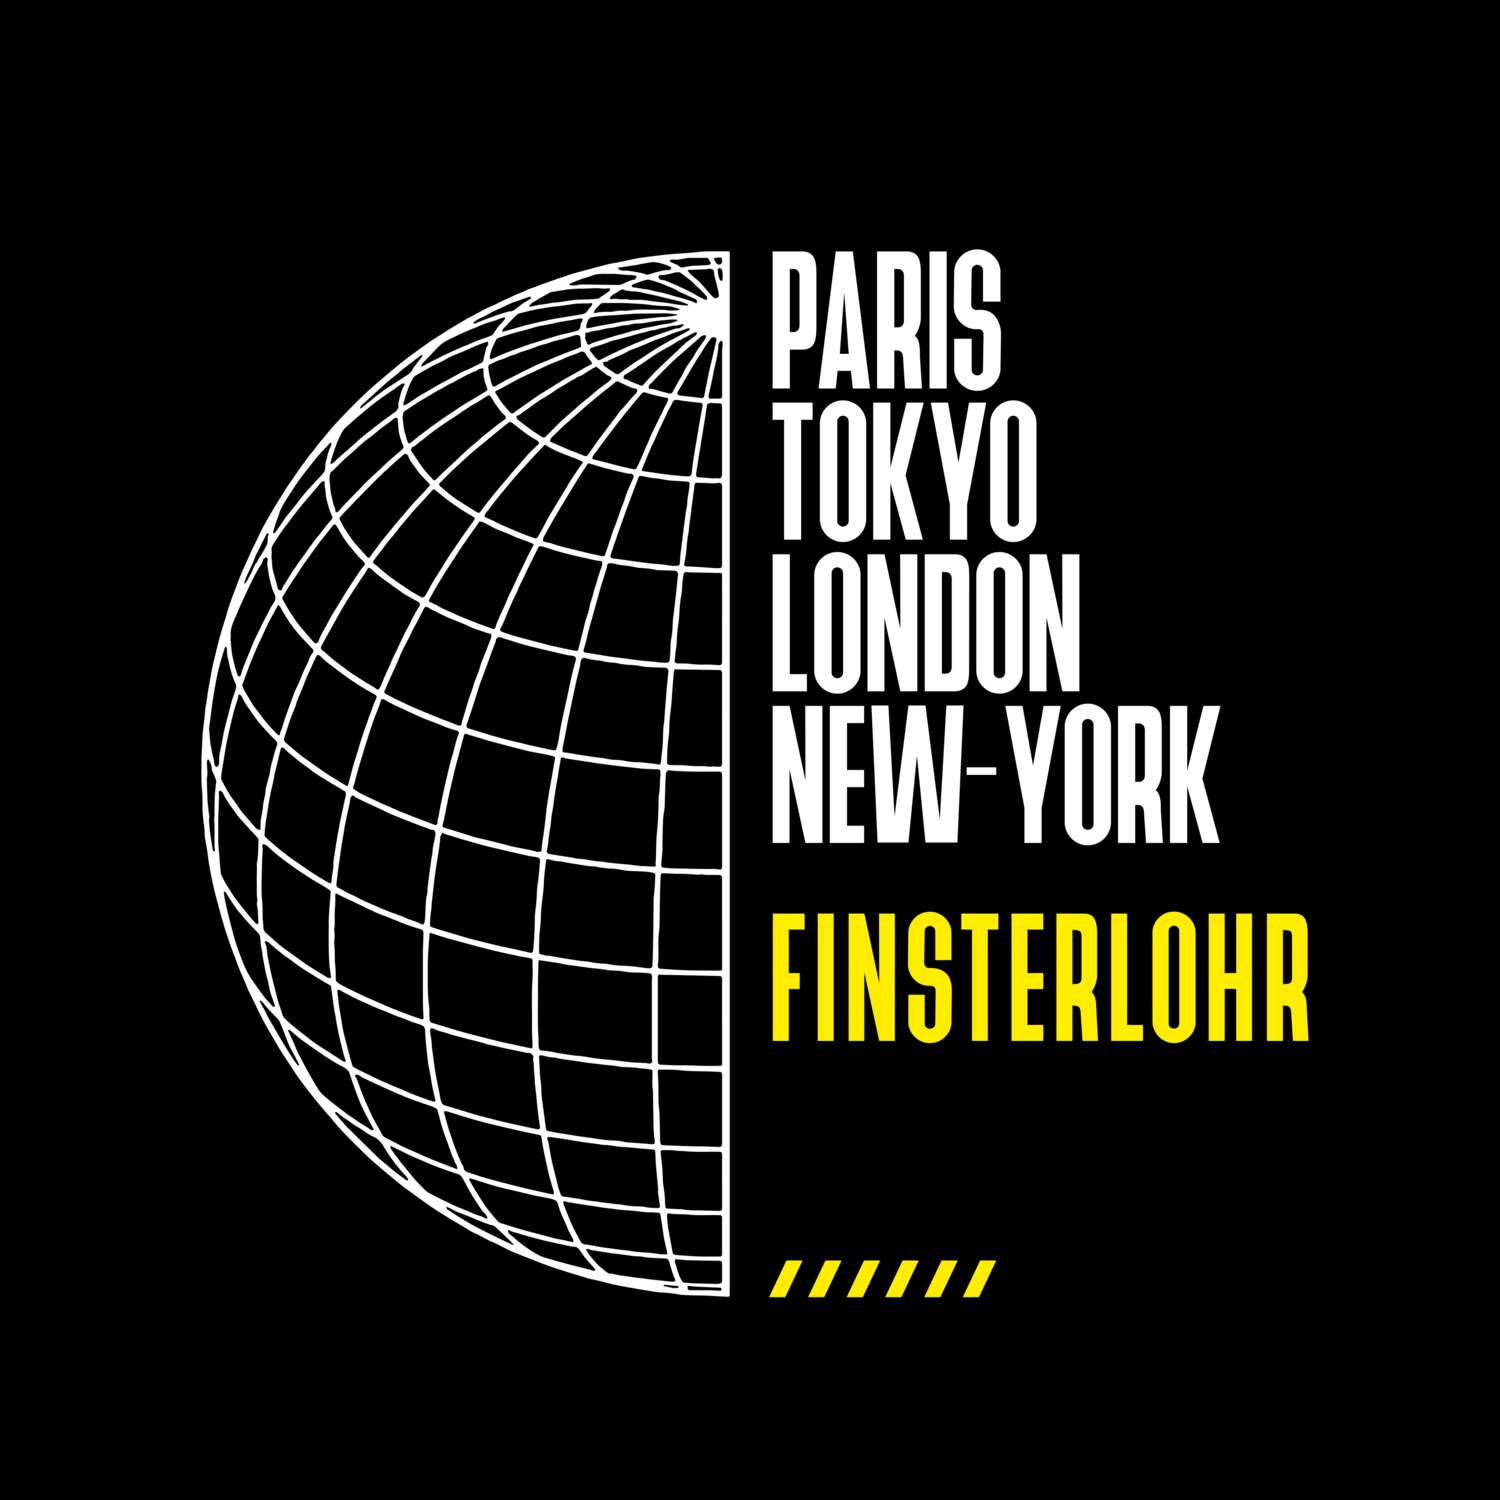 Finsterlohr T-Shirt »Paris Tokyo London«